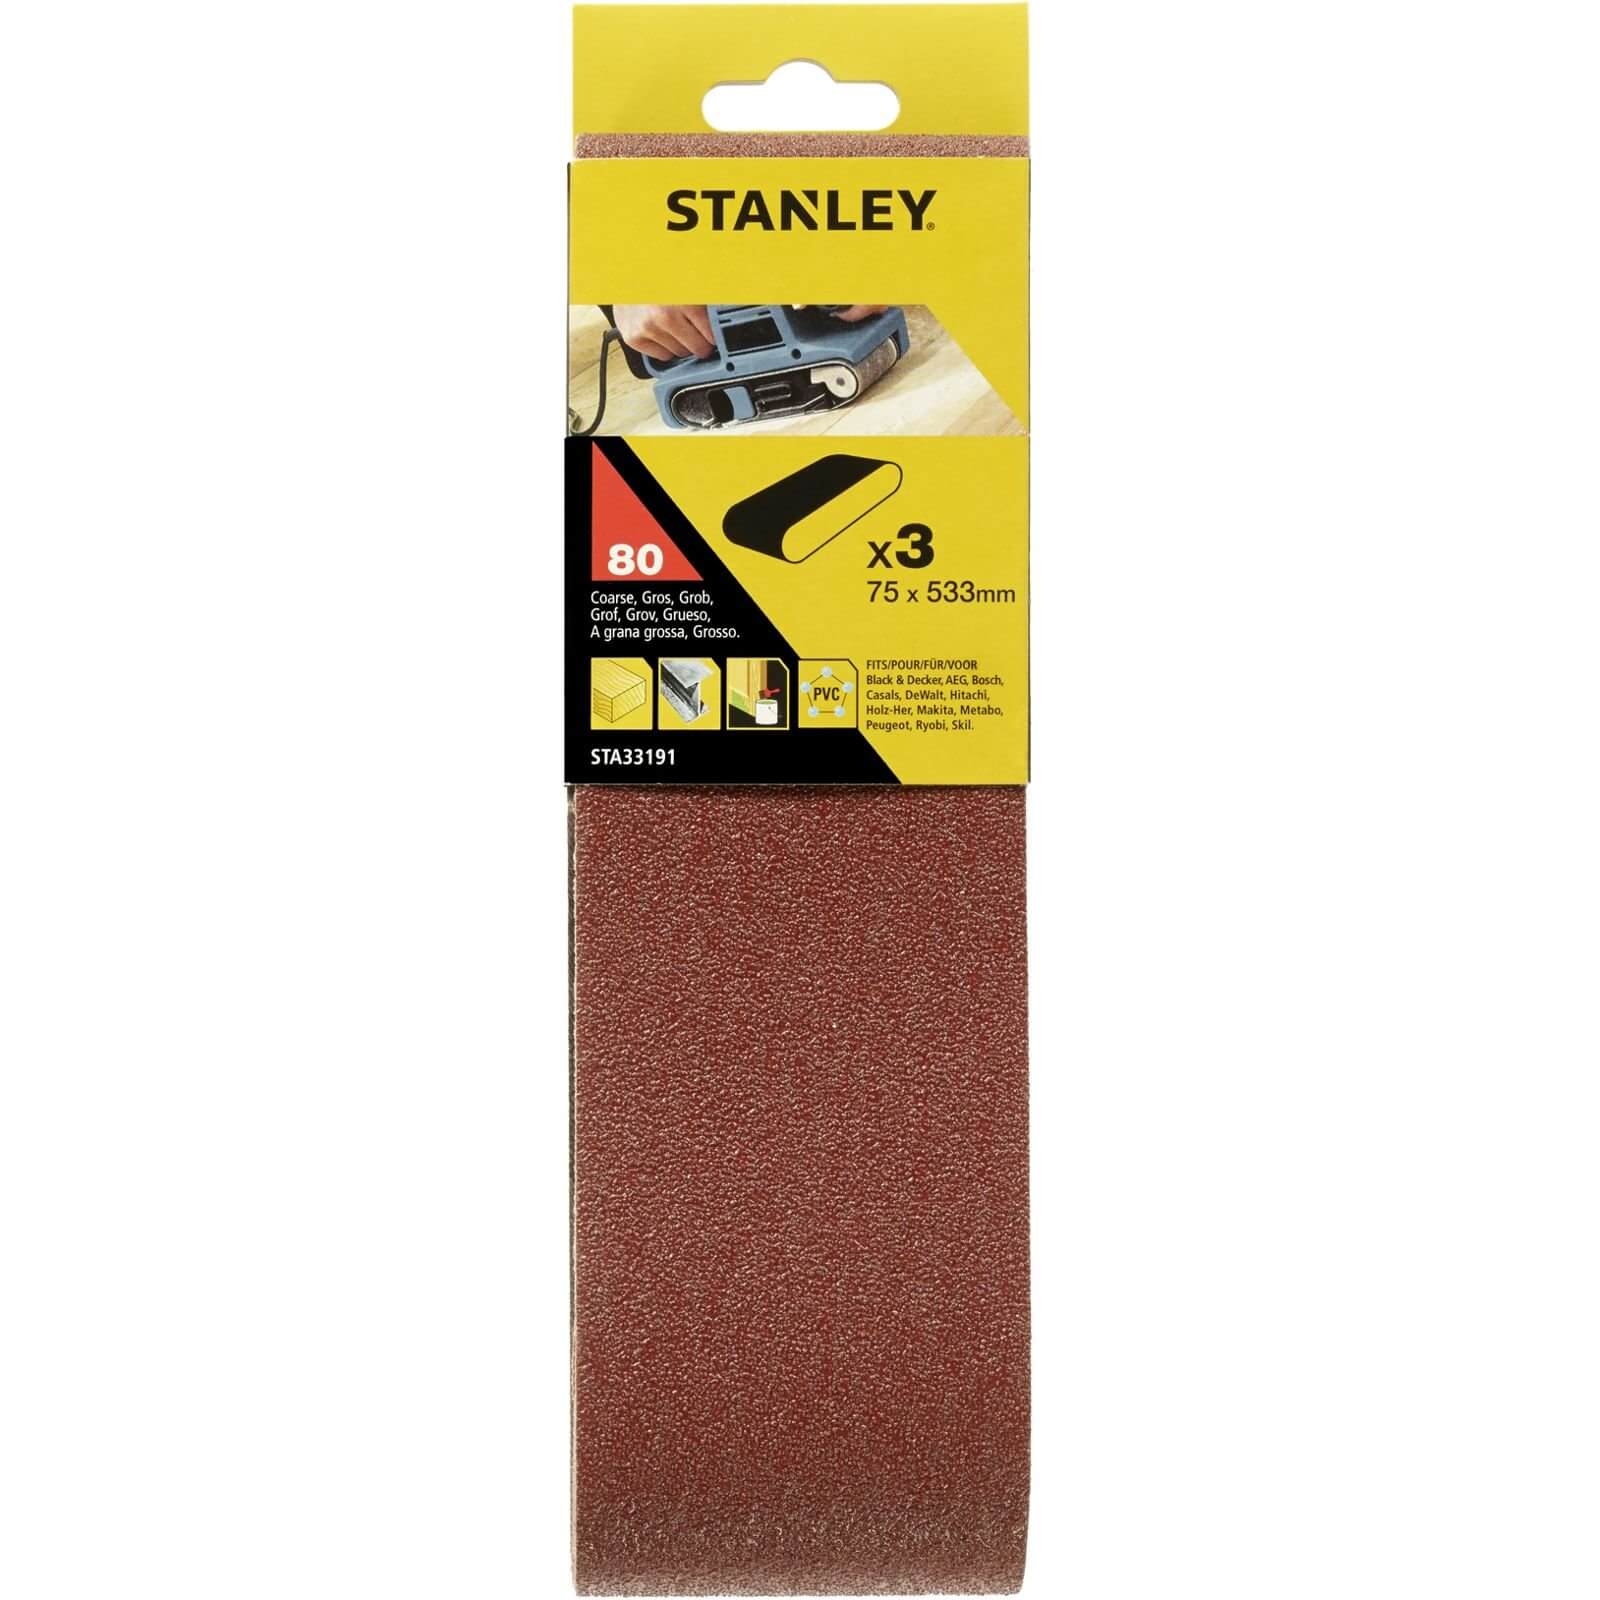 Photo of Stanley Belt Sander Belts 75x533 80g - Sta33191-xj